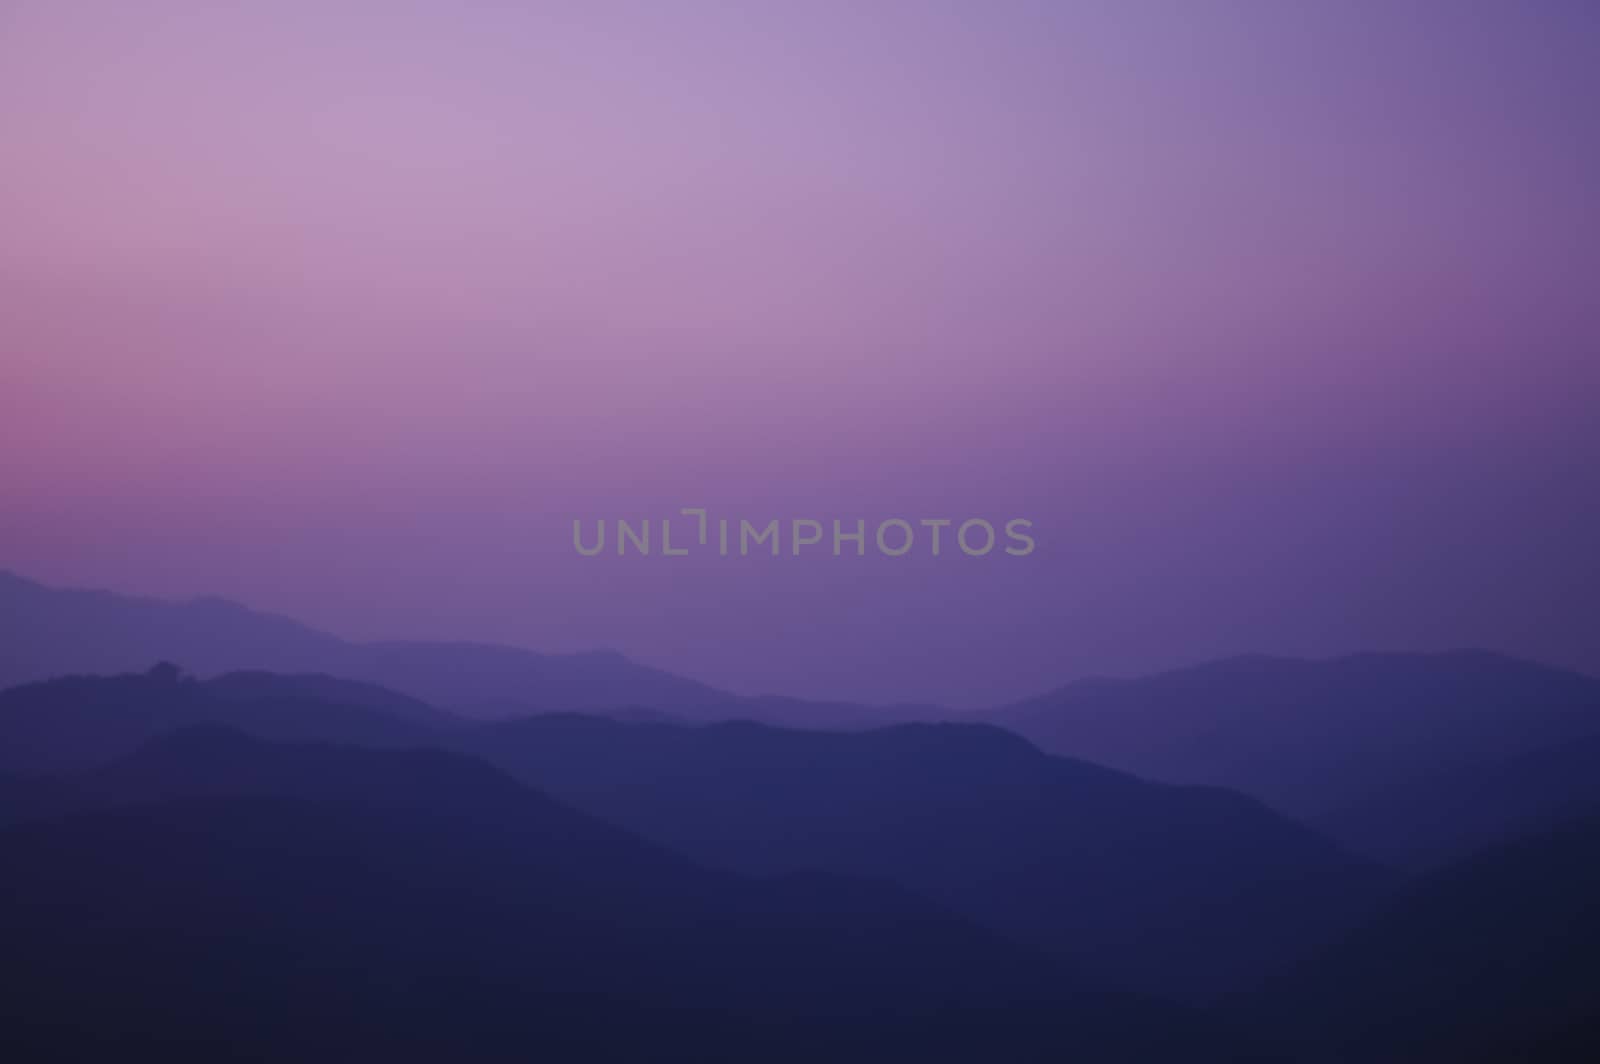 twilight sunset at the peak of the mountain by eyeofpaul